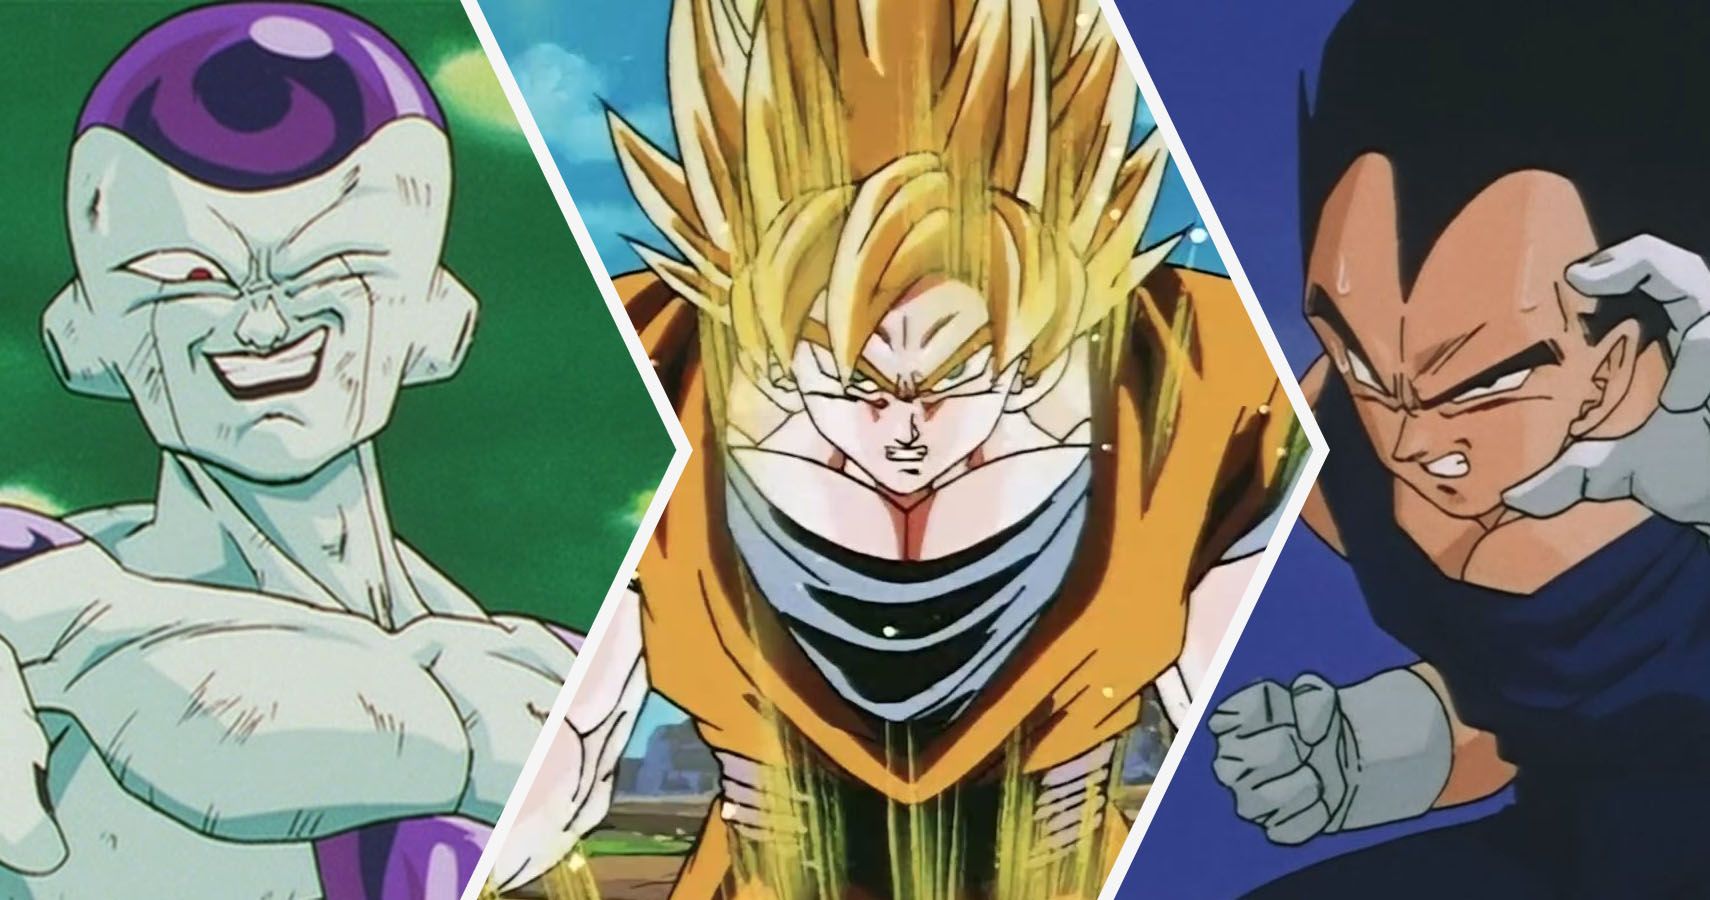 Frieza, Super Saiyan Goku, and Vegeta from Dragon Ball Z